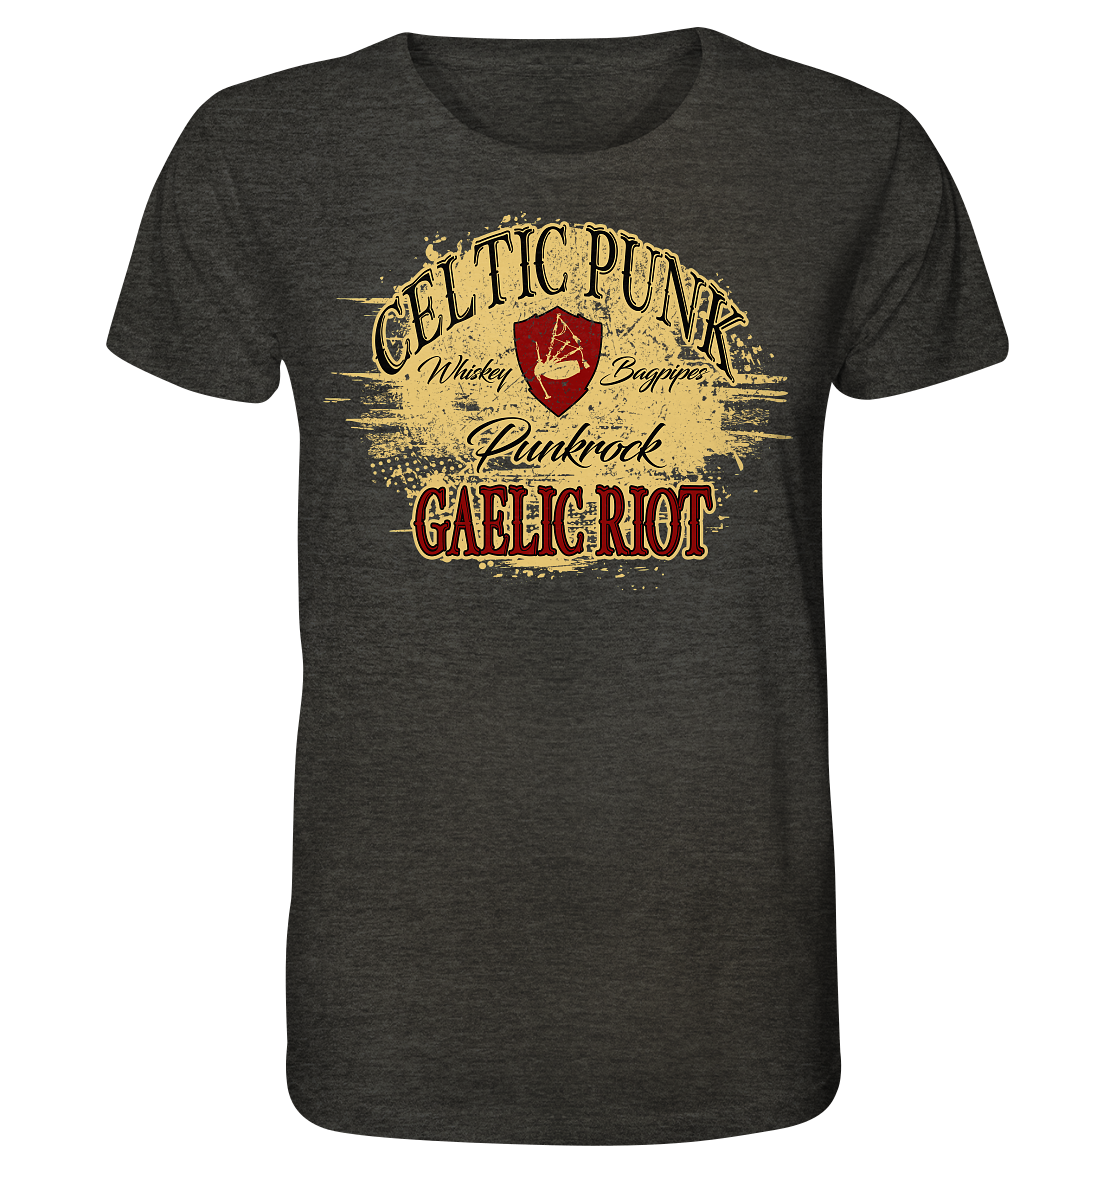 Celtic Punk "Gaelic Riot" - Organic Shirt (meliert)